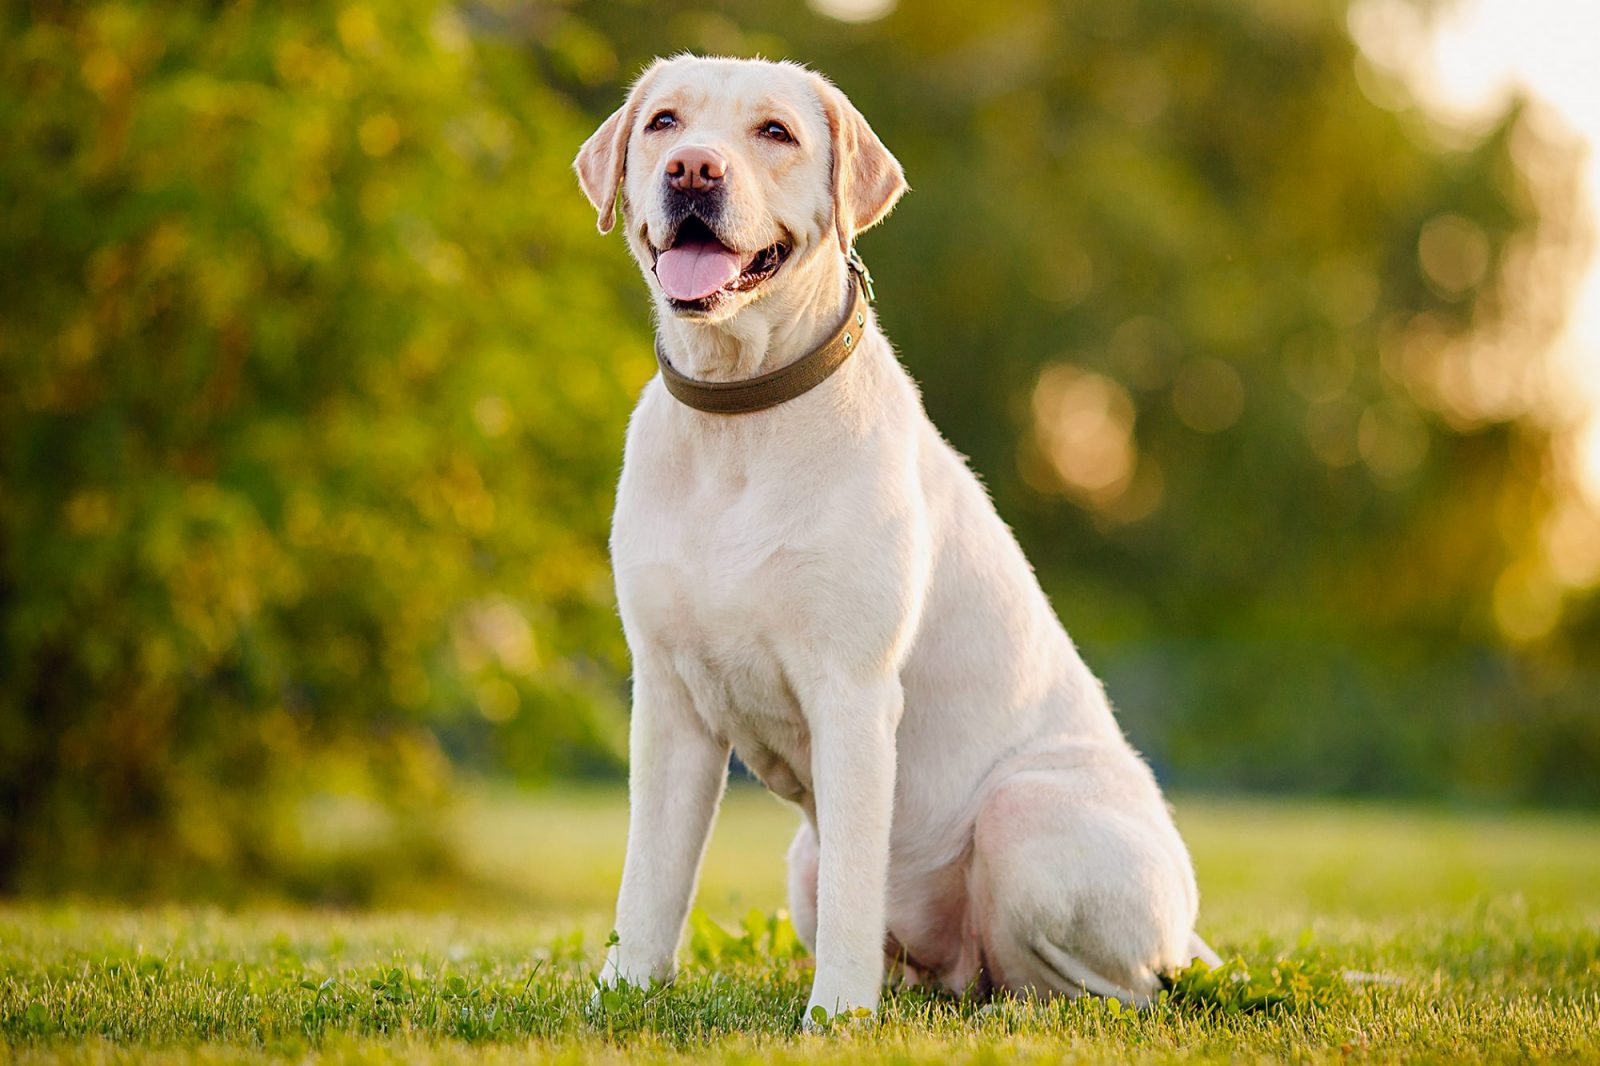 Which Big Dog And Small Dog Are You A Combination Of? 🐶 Labrador Retriever